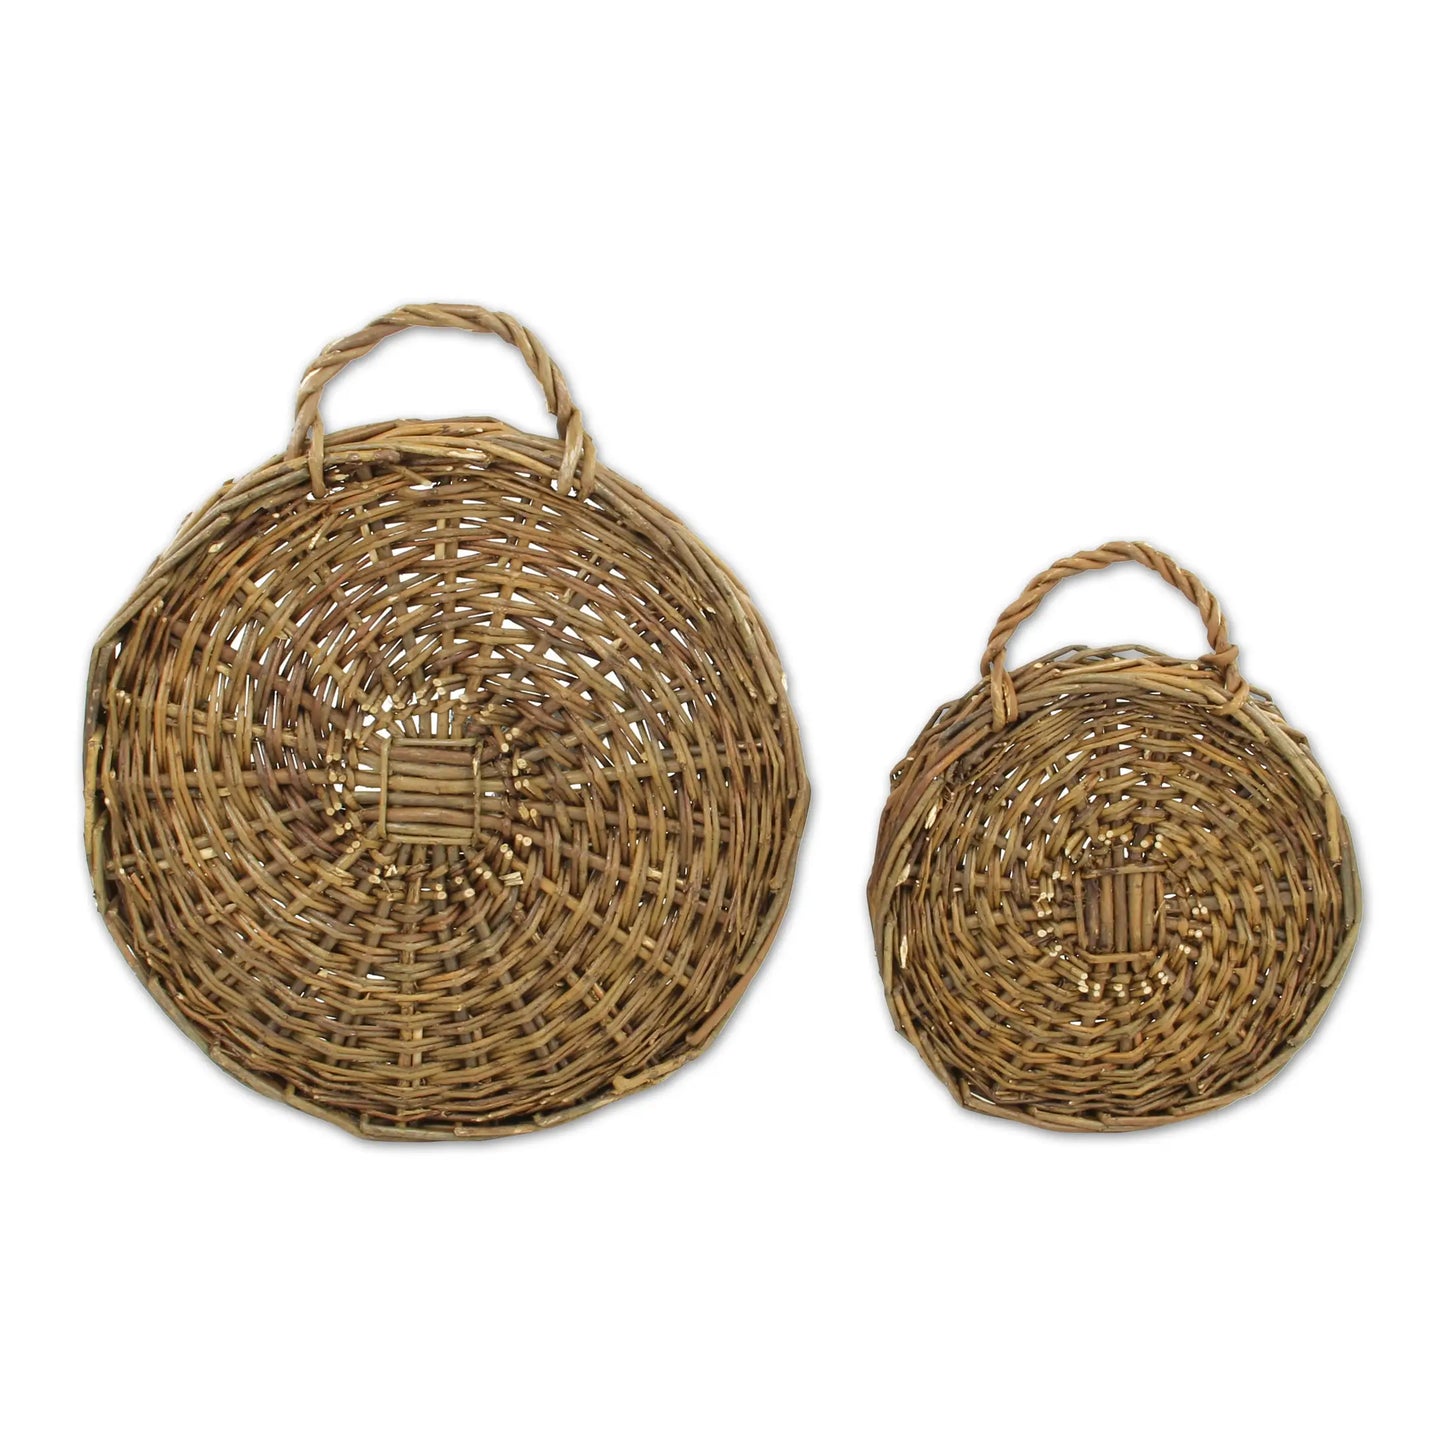 Eskichi Wall Basket Set